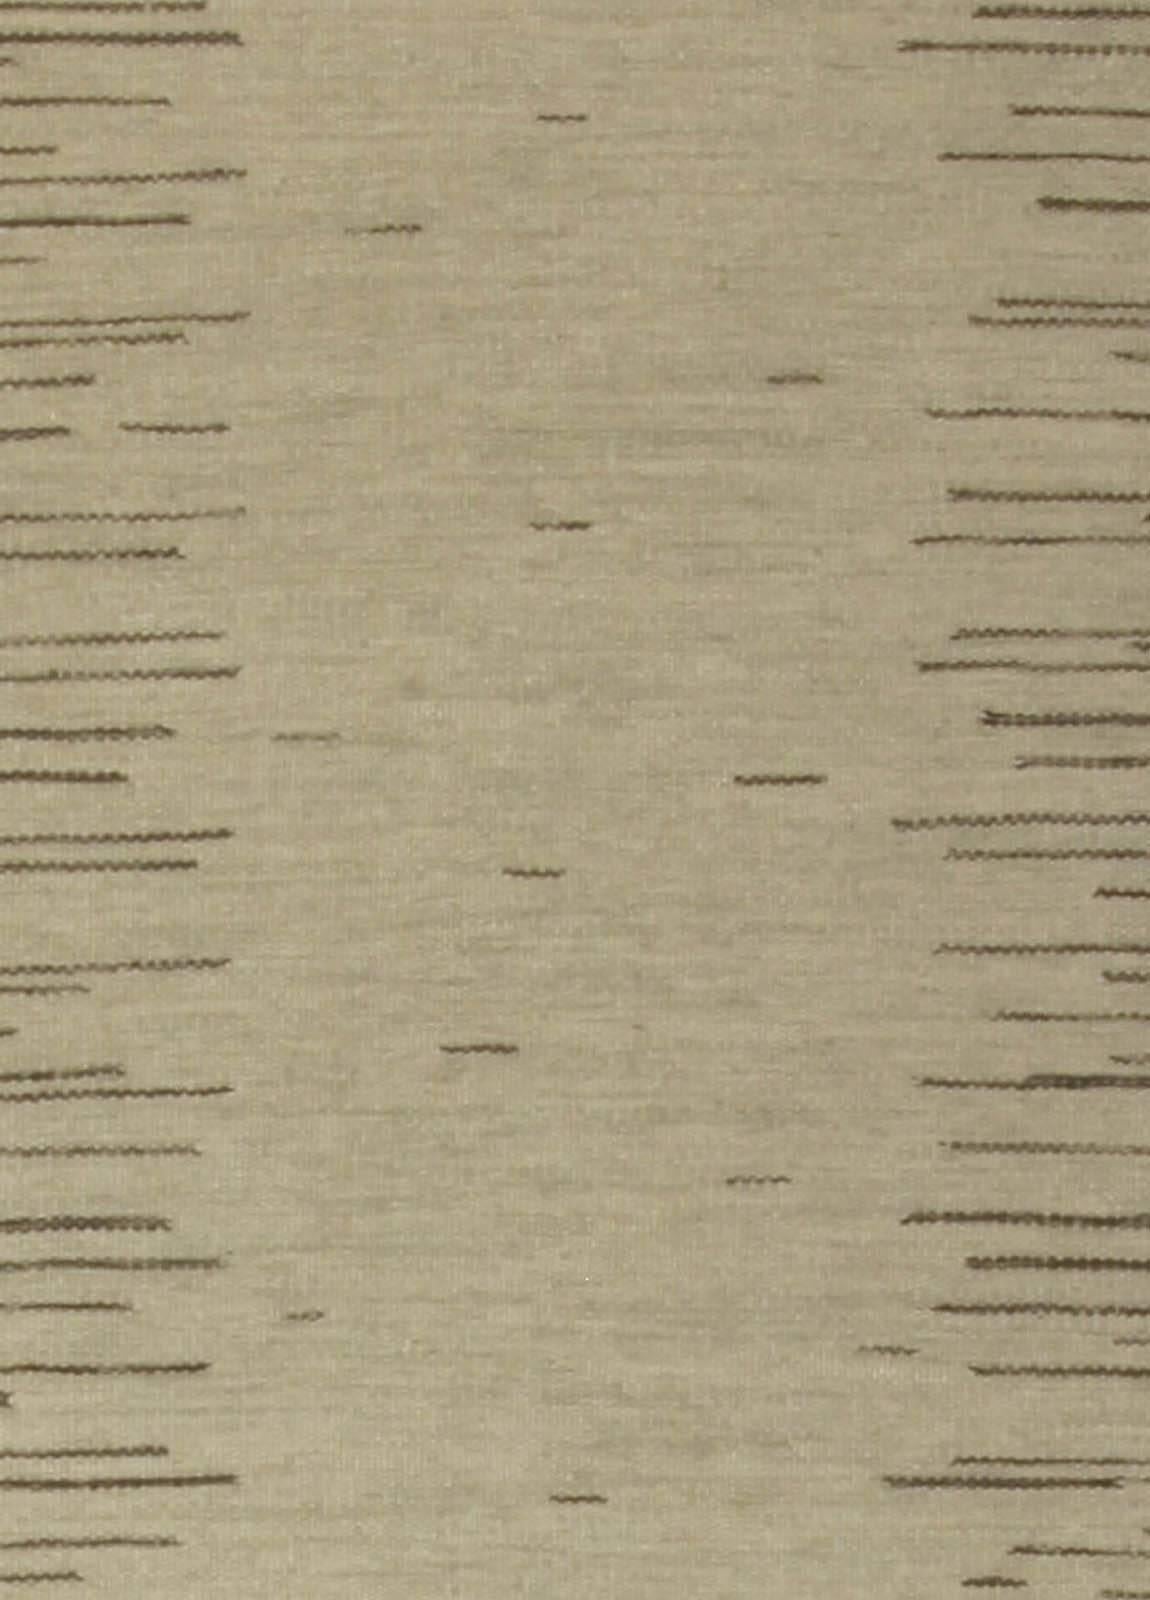 Contemporary Forel Scandinavian style brown, beige wool rug by Doris Leslie Blau.
Size: 9'2